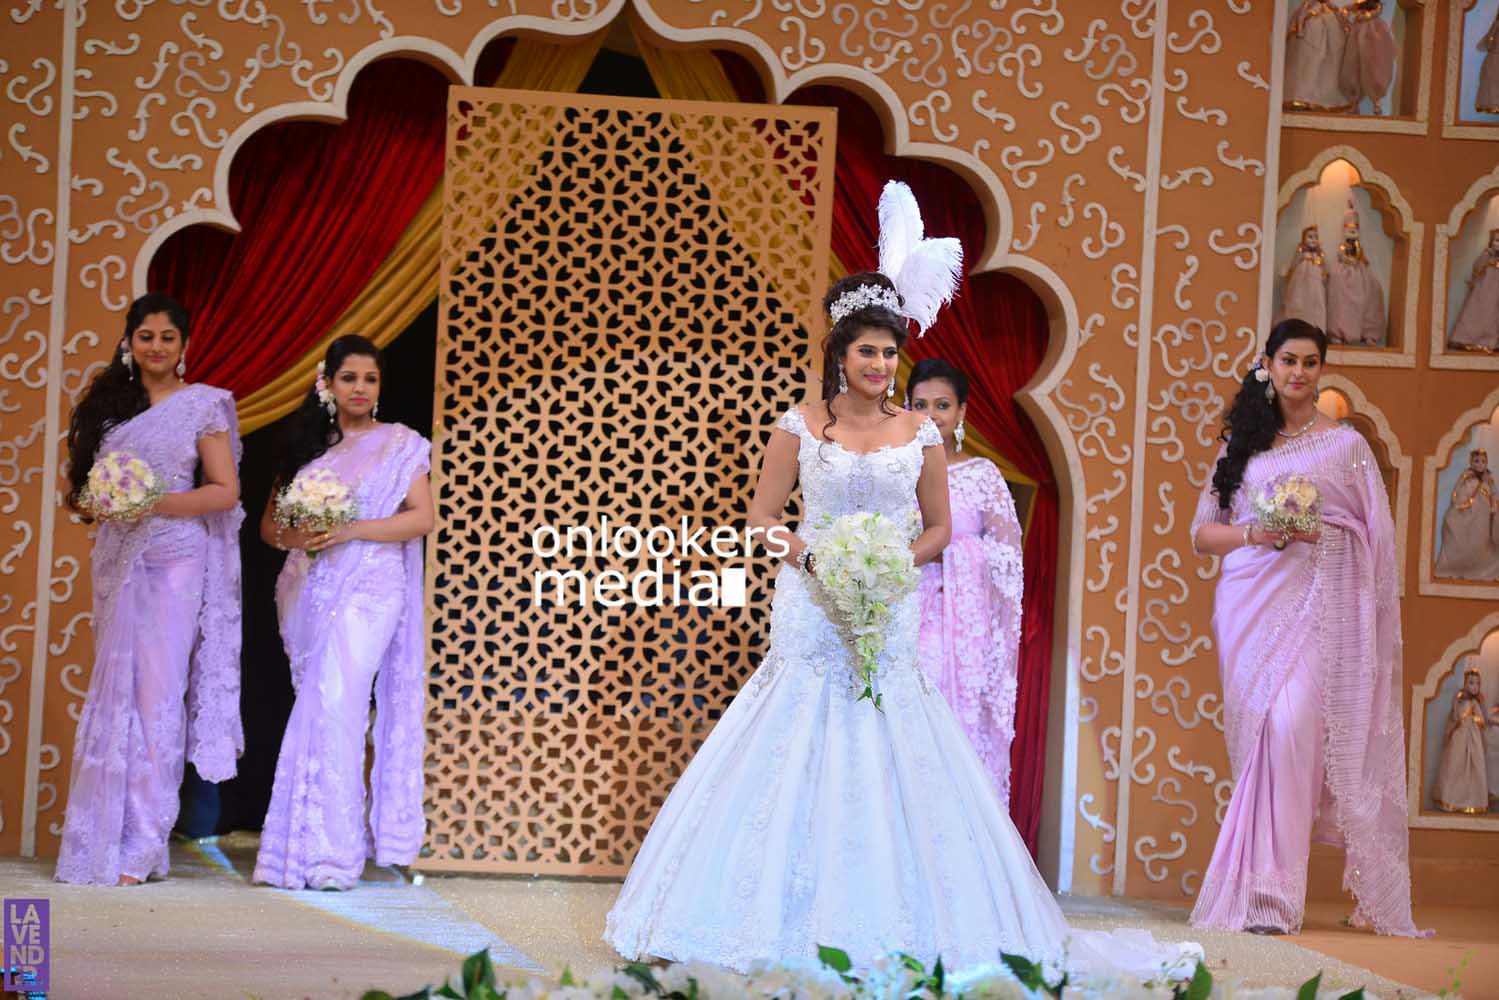 Beena Kannan Bridal Show 2016 Stills Photos Seematti